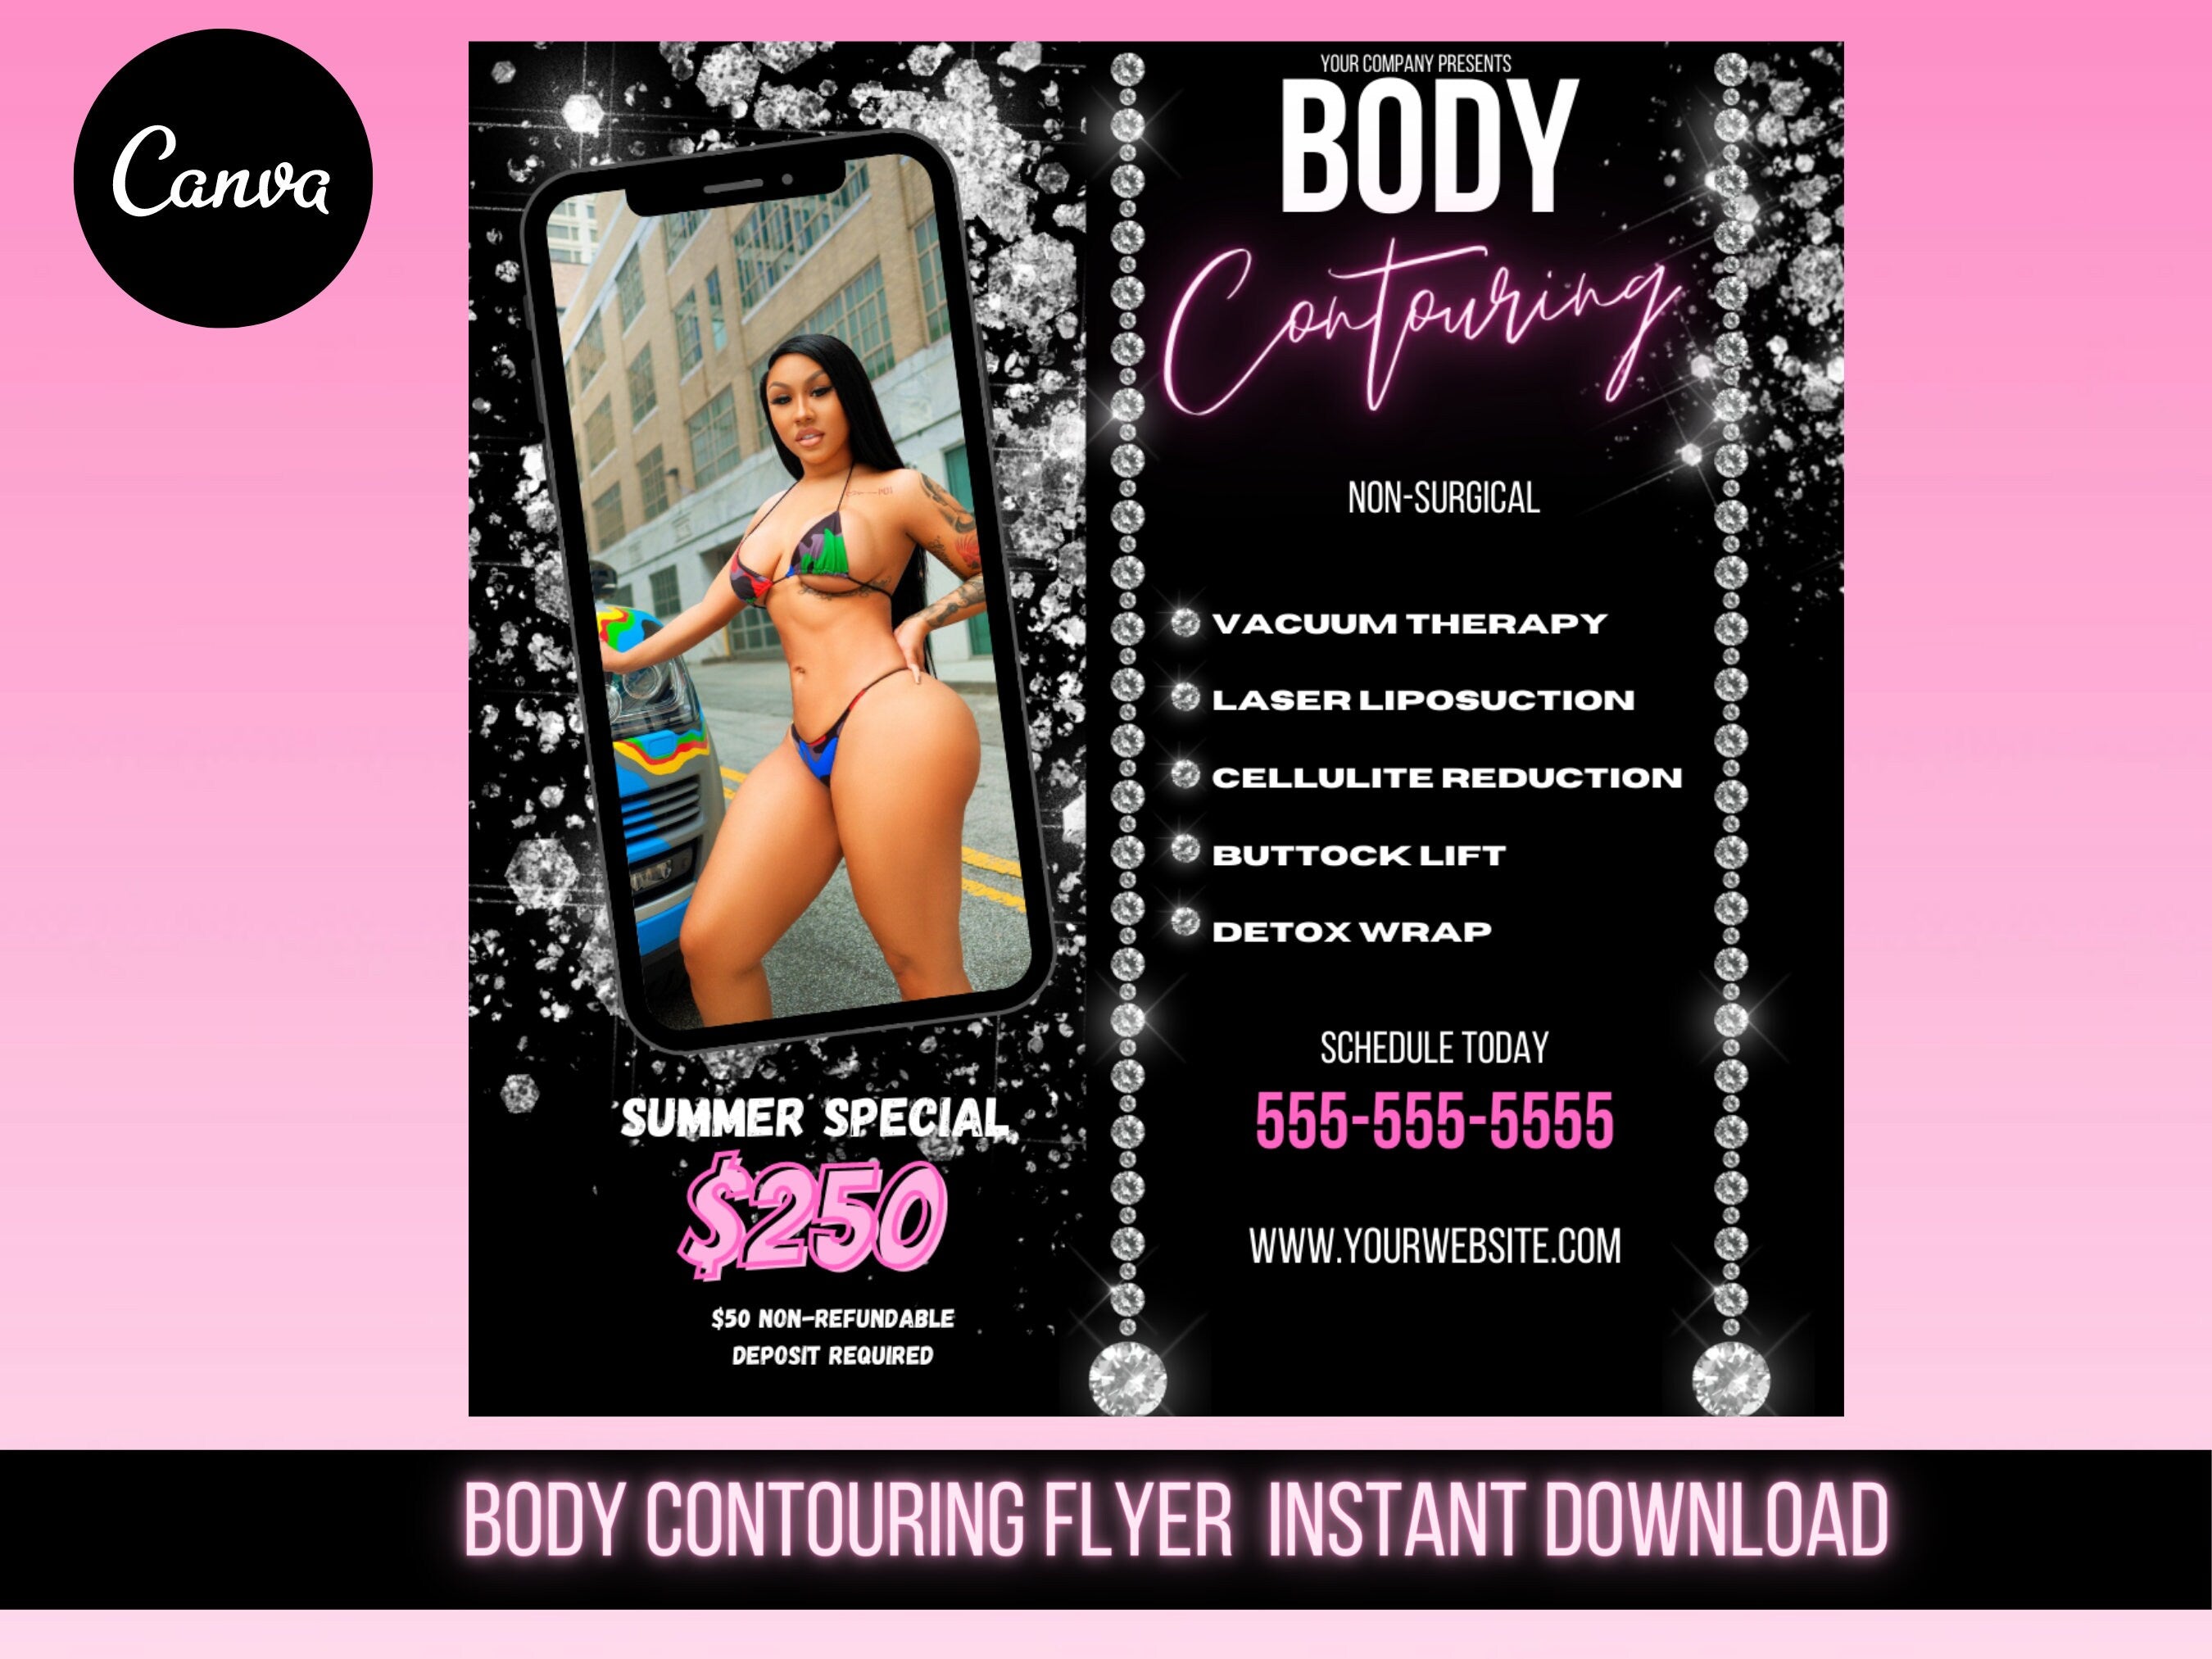 Body Contouring flyer, DIY, Edit Template, Canva Flyer, Body Contour , BBL, Shapewear Flyer, Beauty Flyer